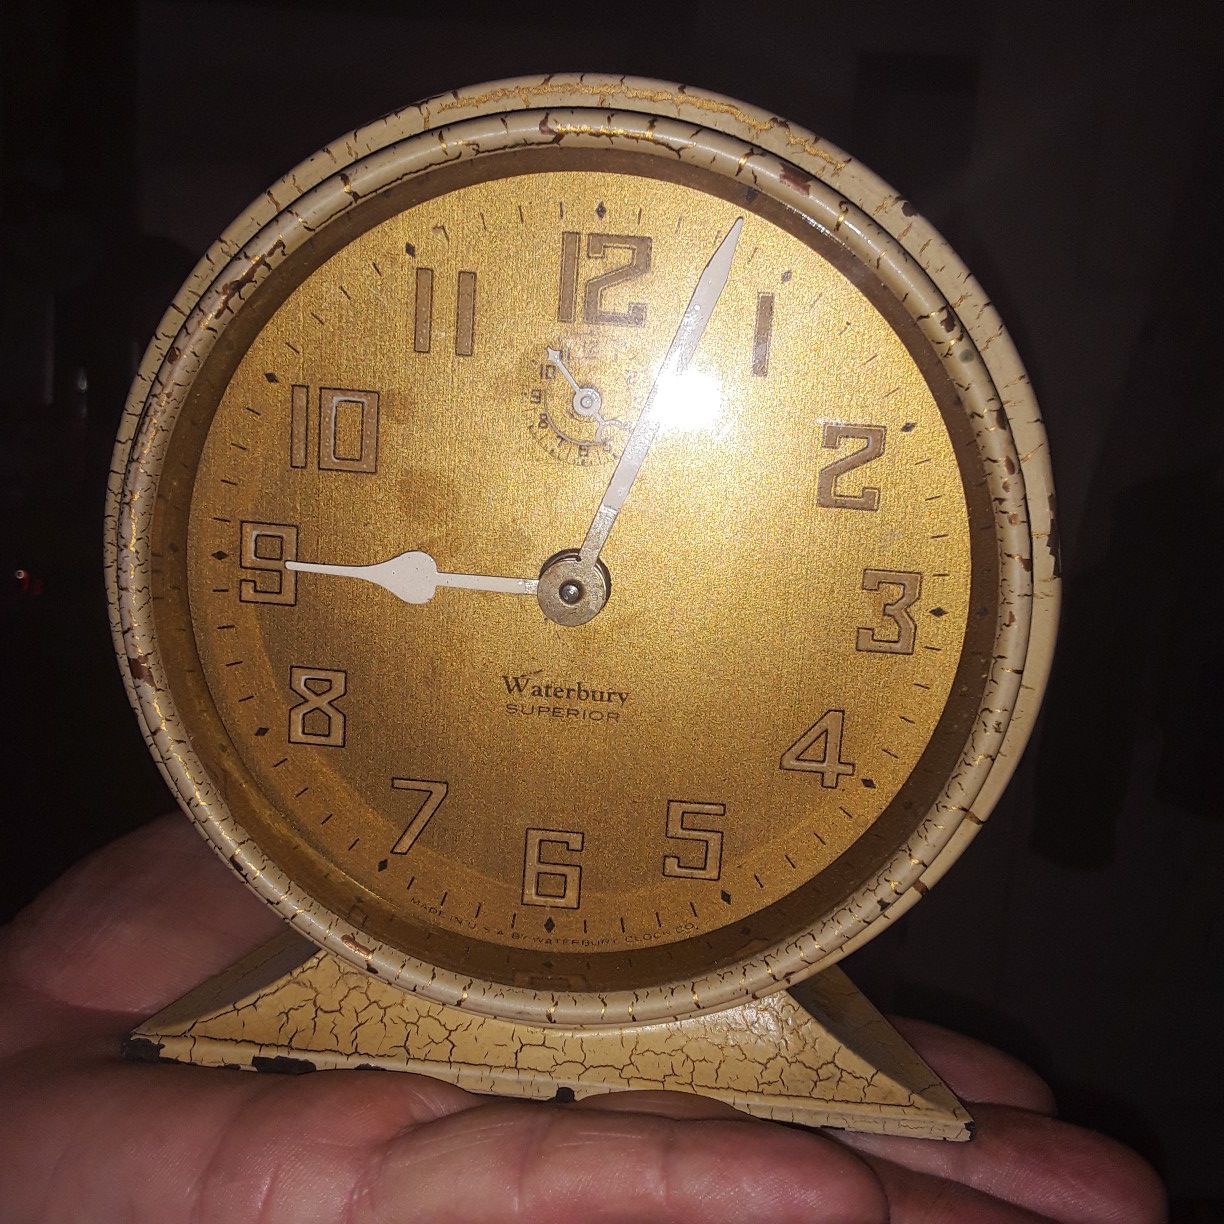 Selling ALL!! Waterbury Superior Antique vintage Alarm clock